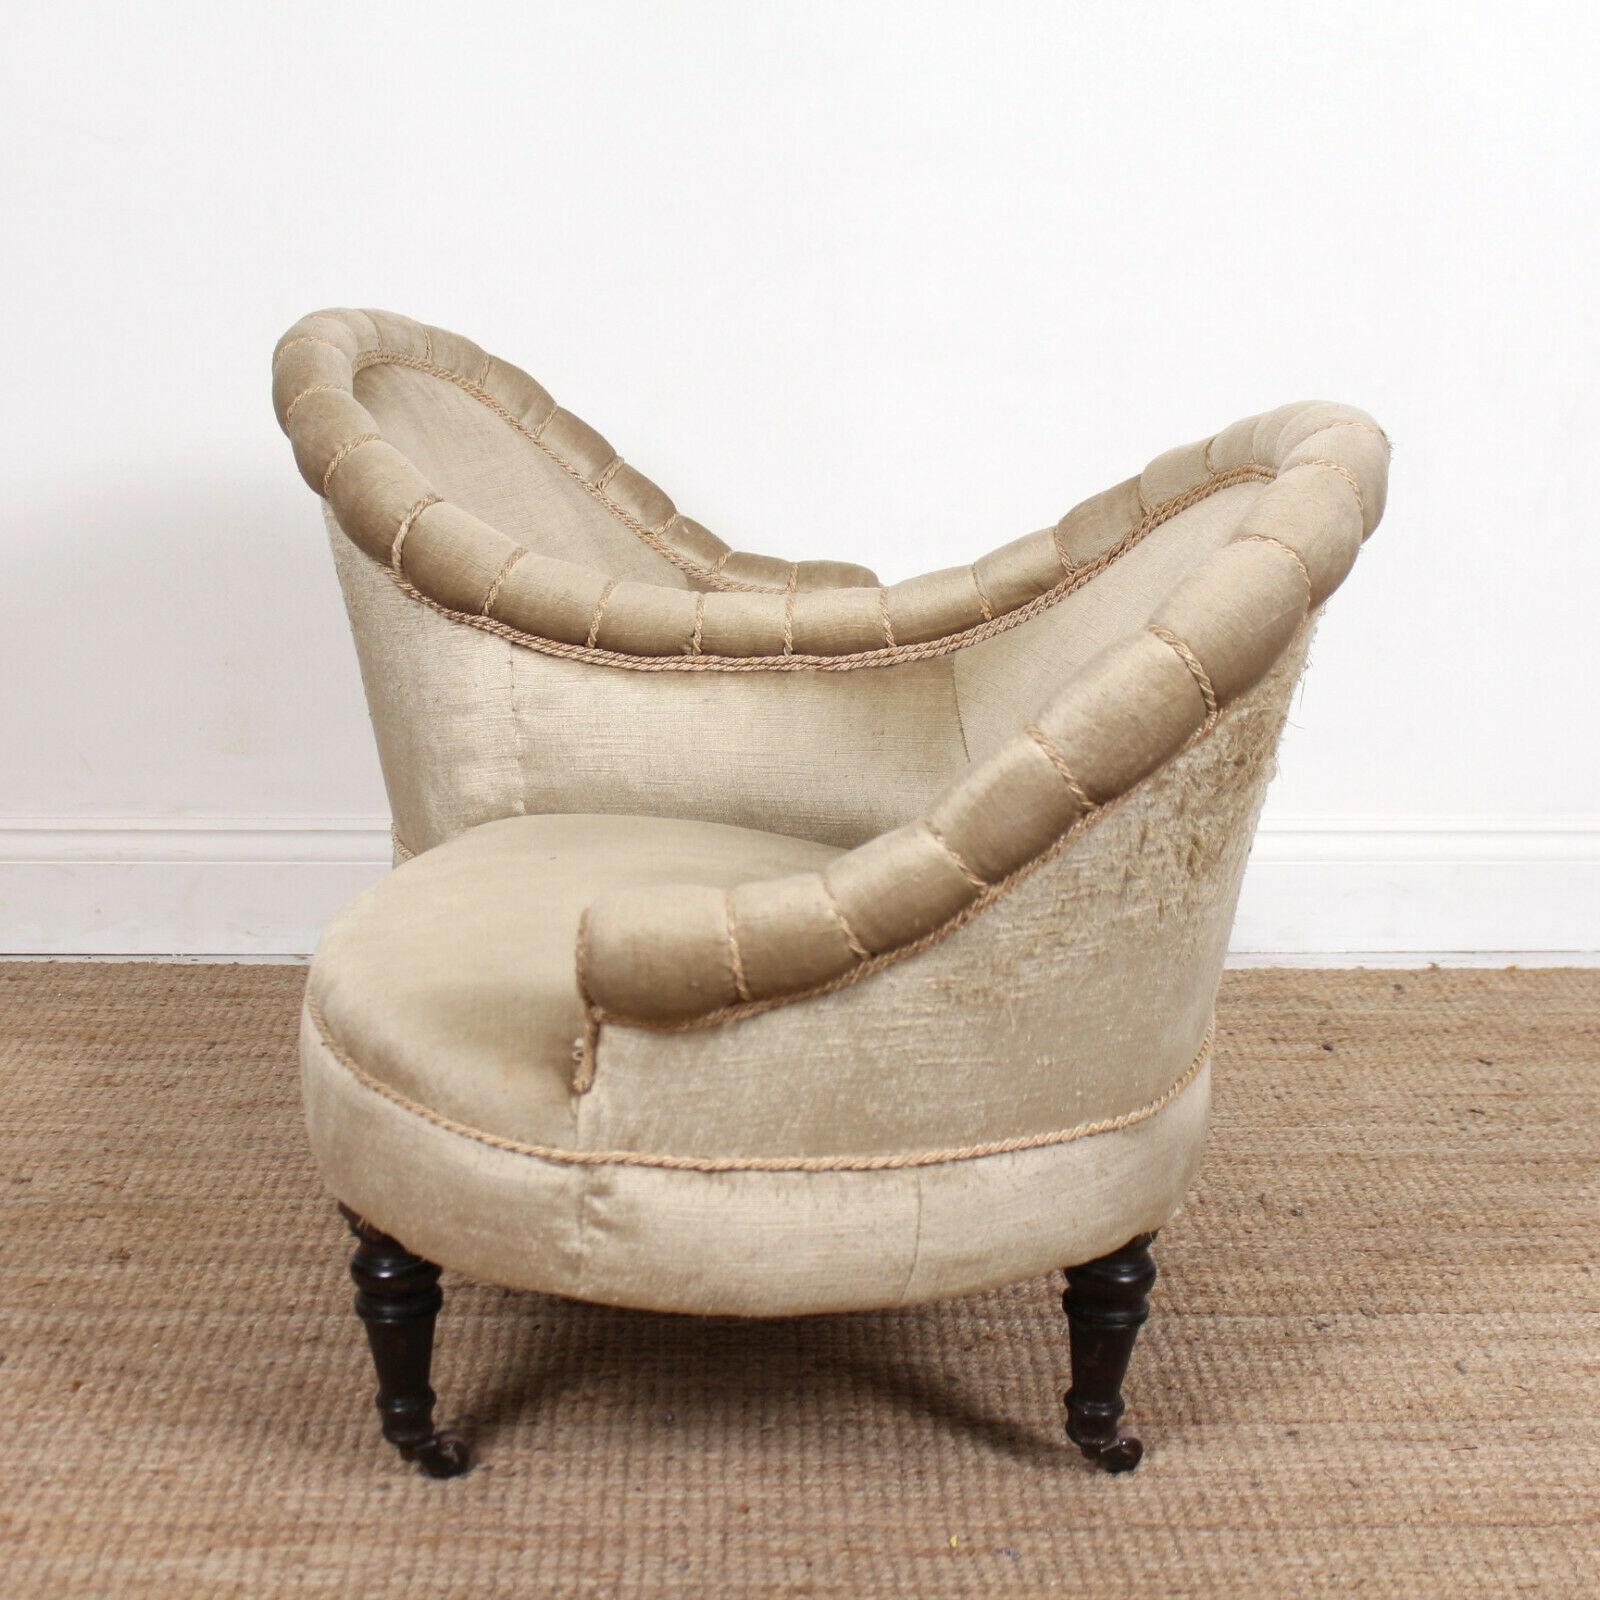 English Antique Conversation Sofa Carved Window Seat 2-Seat Petite Victorian Settee